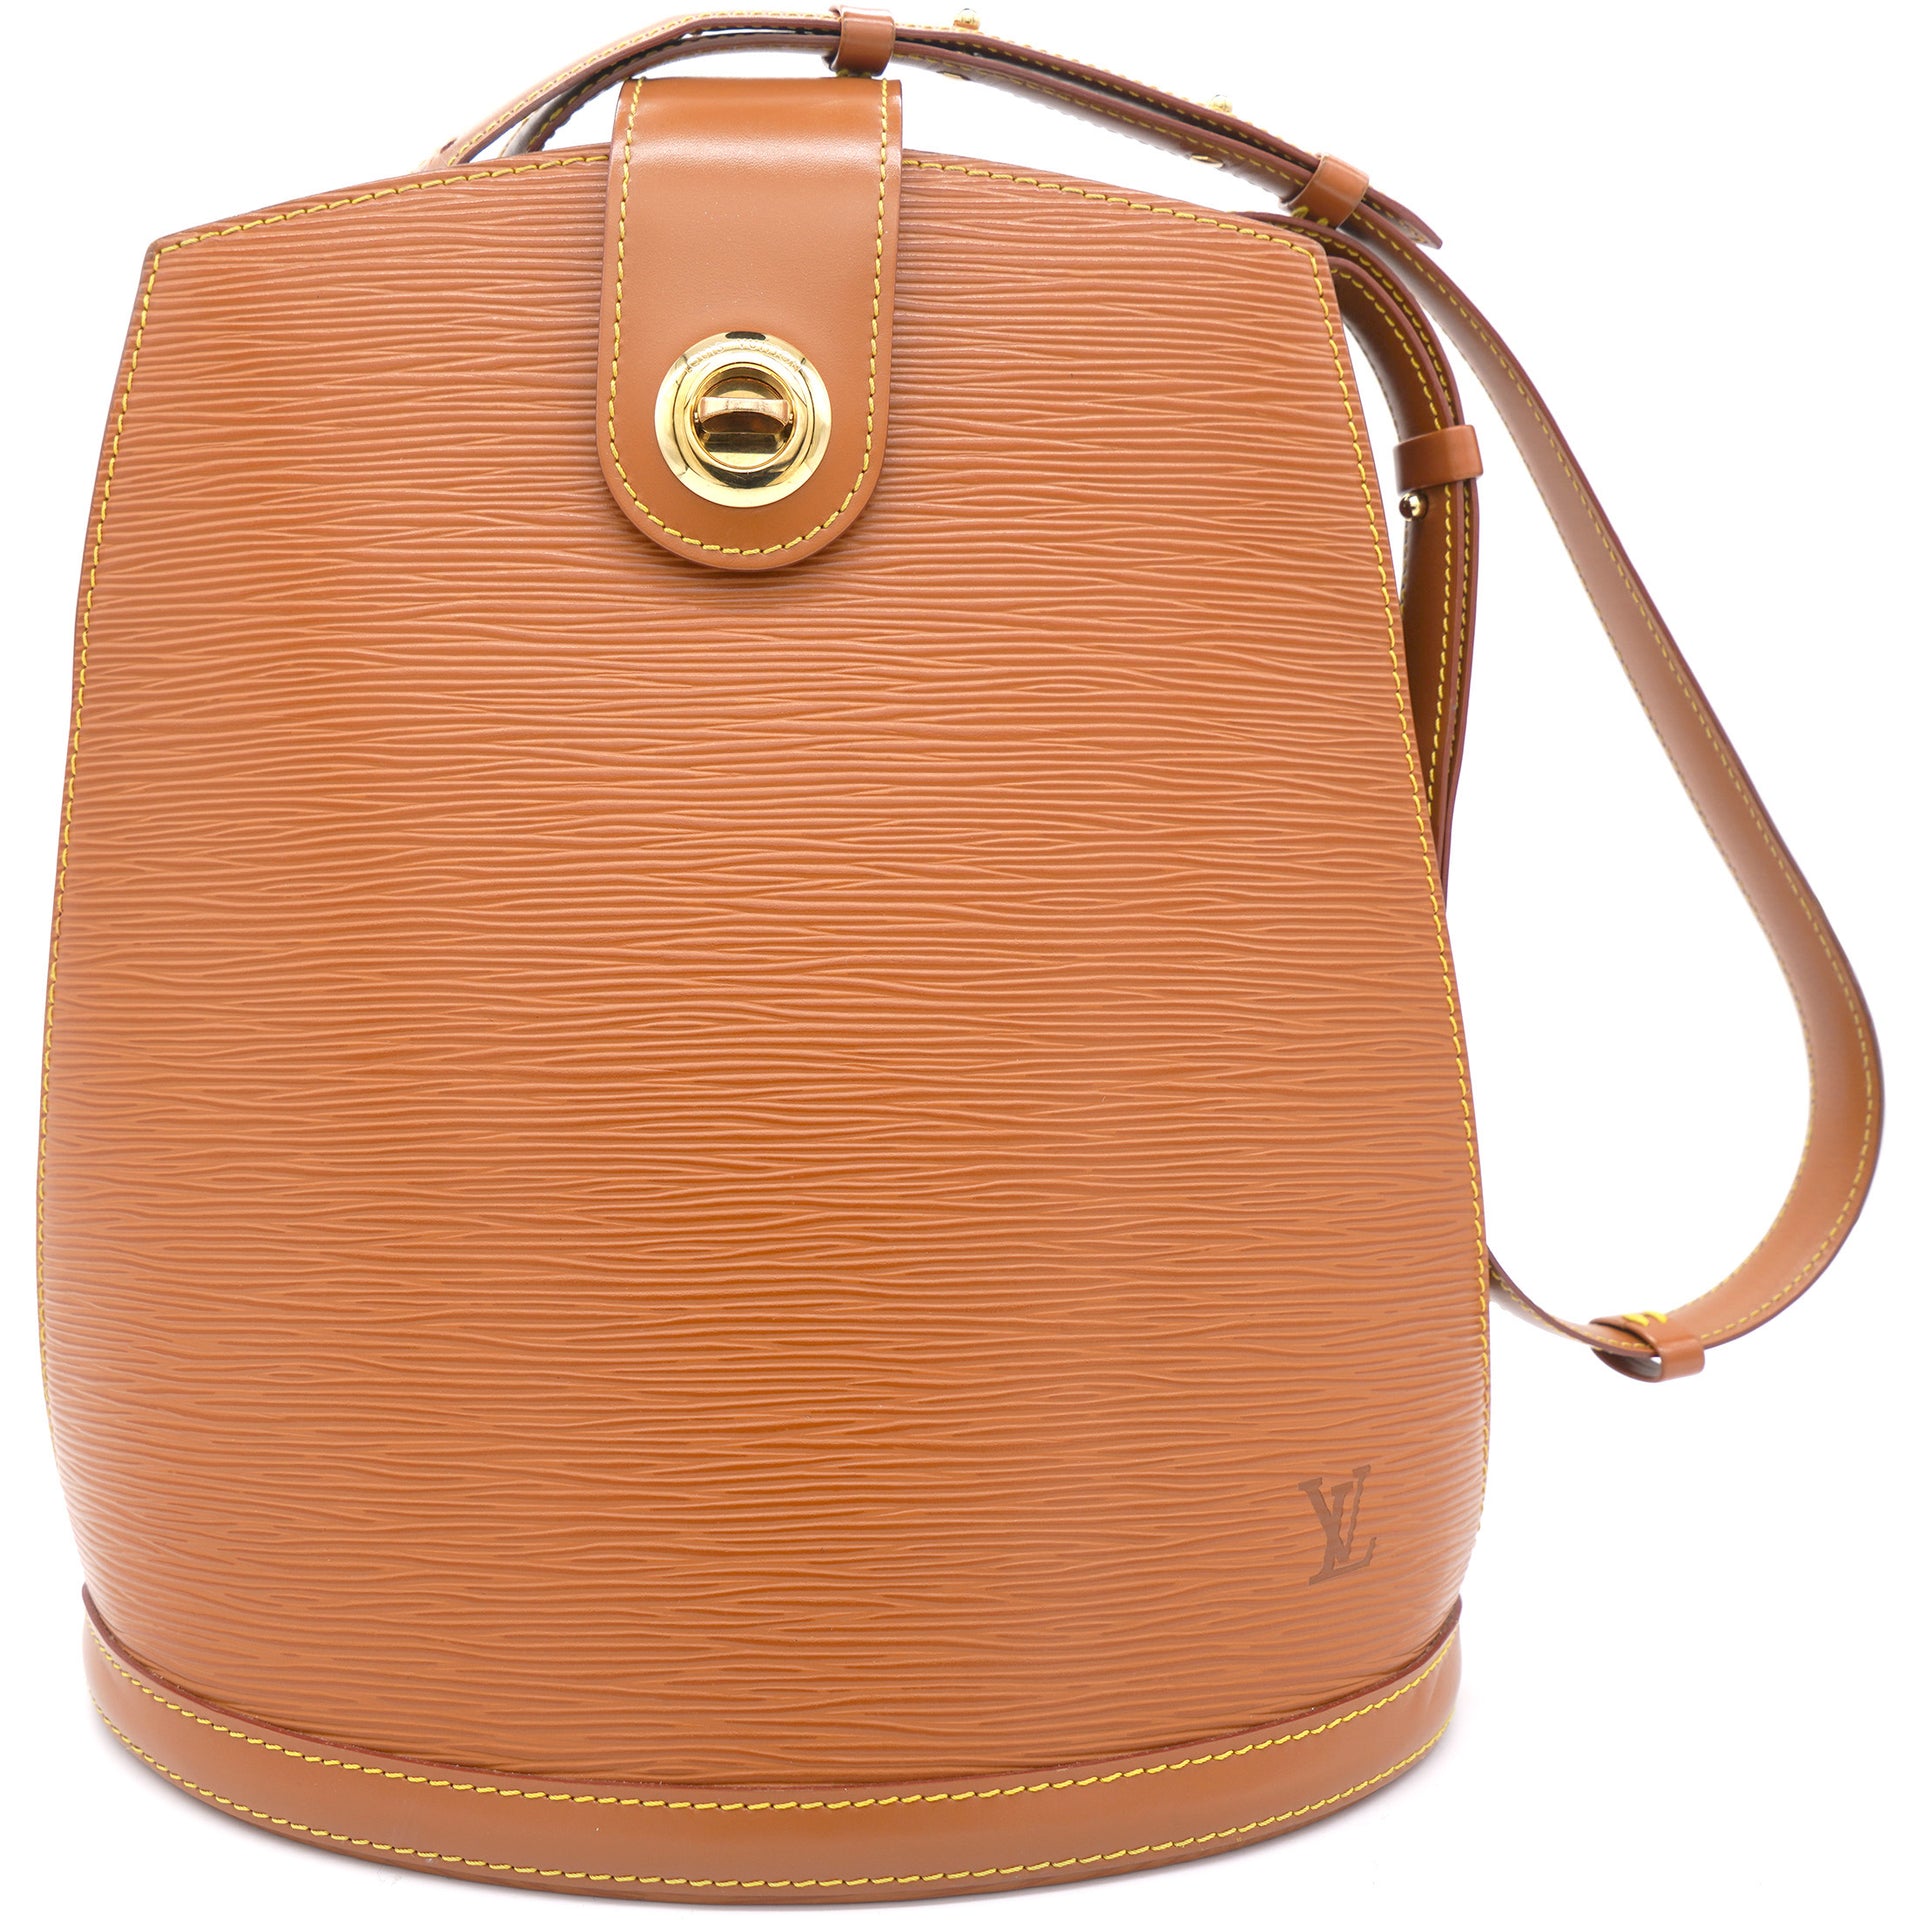 Louis Vuitton Neverfull Similar Handbags - Petite Haus